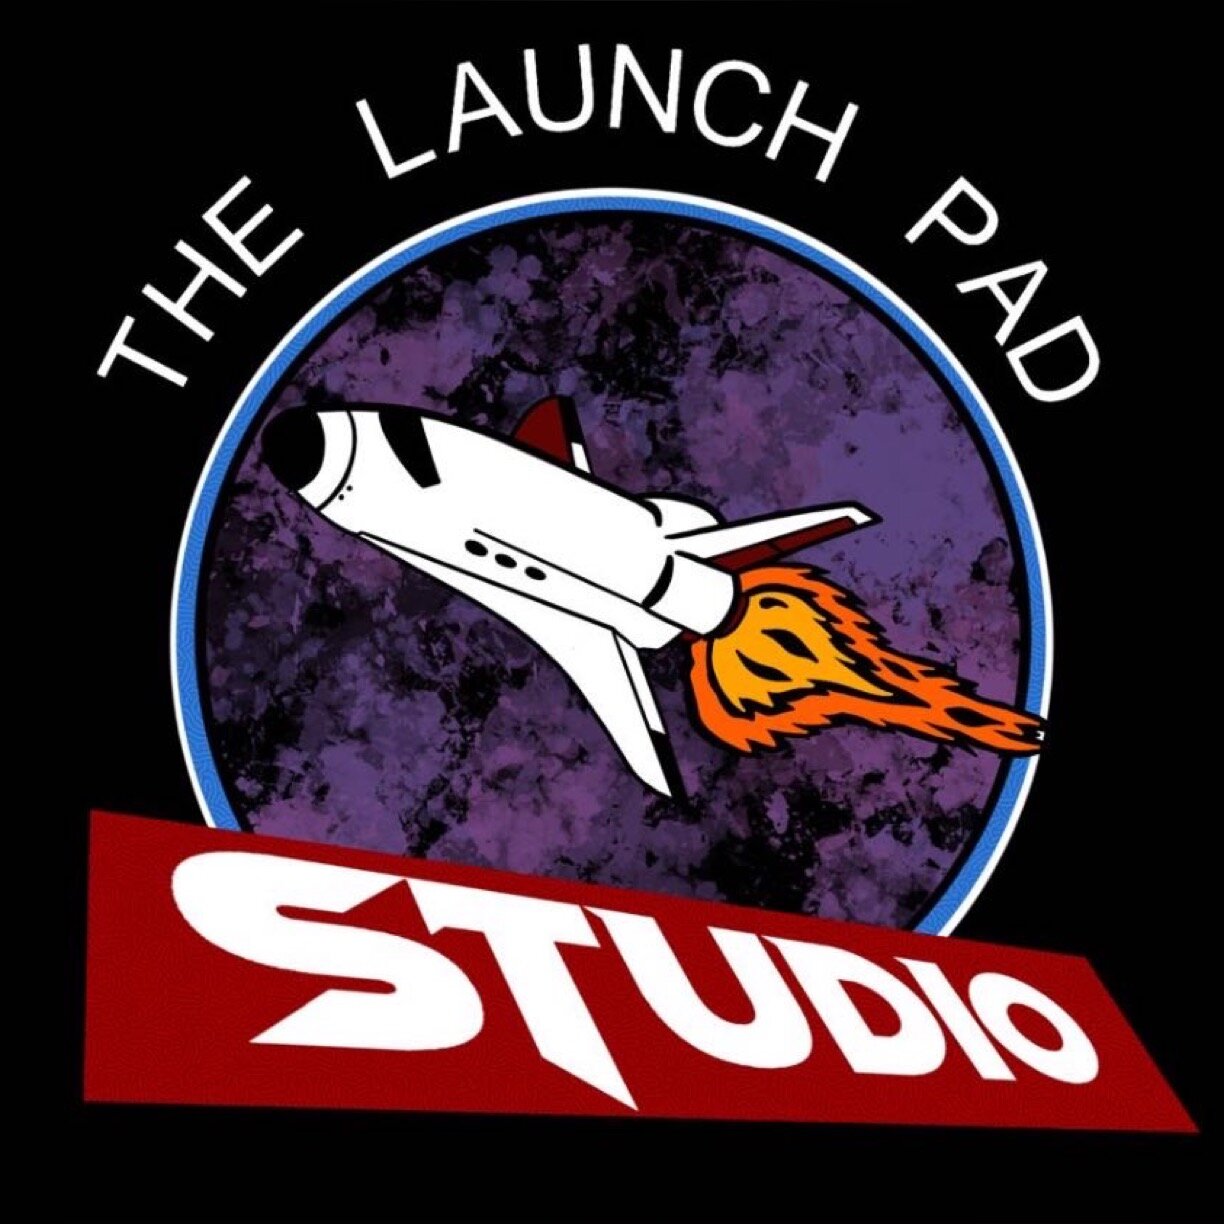 The Launch Pad Studio